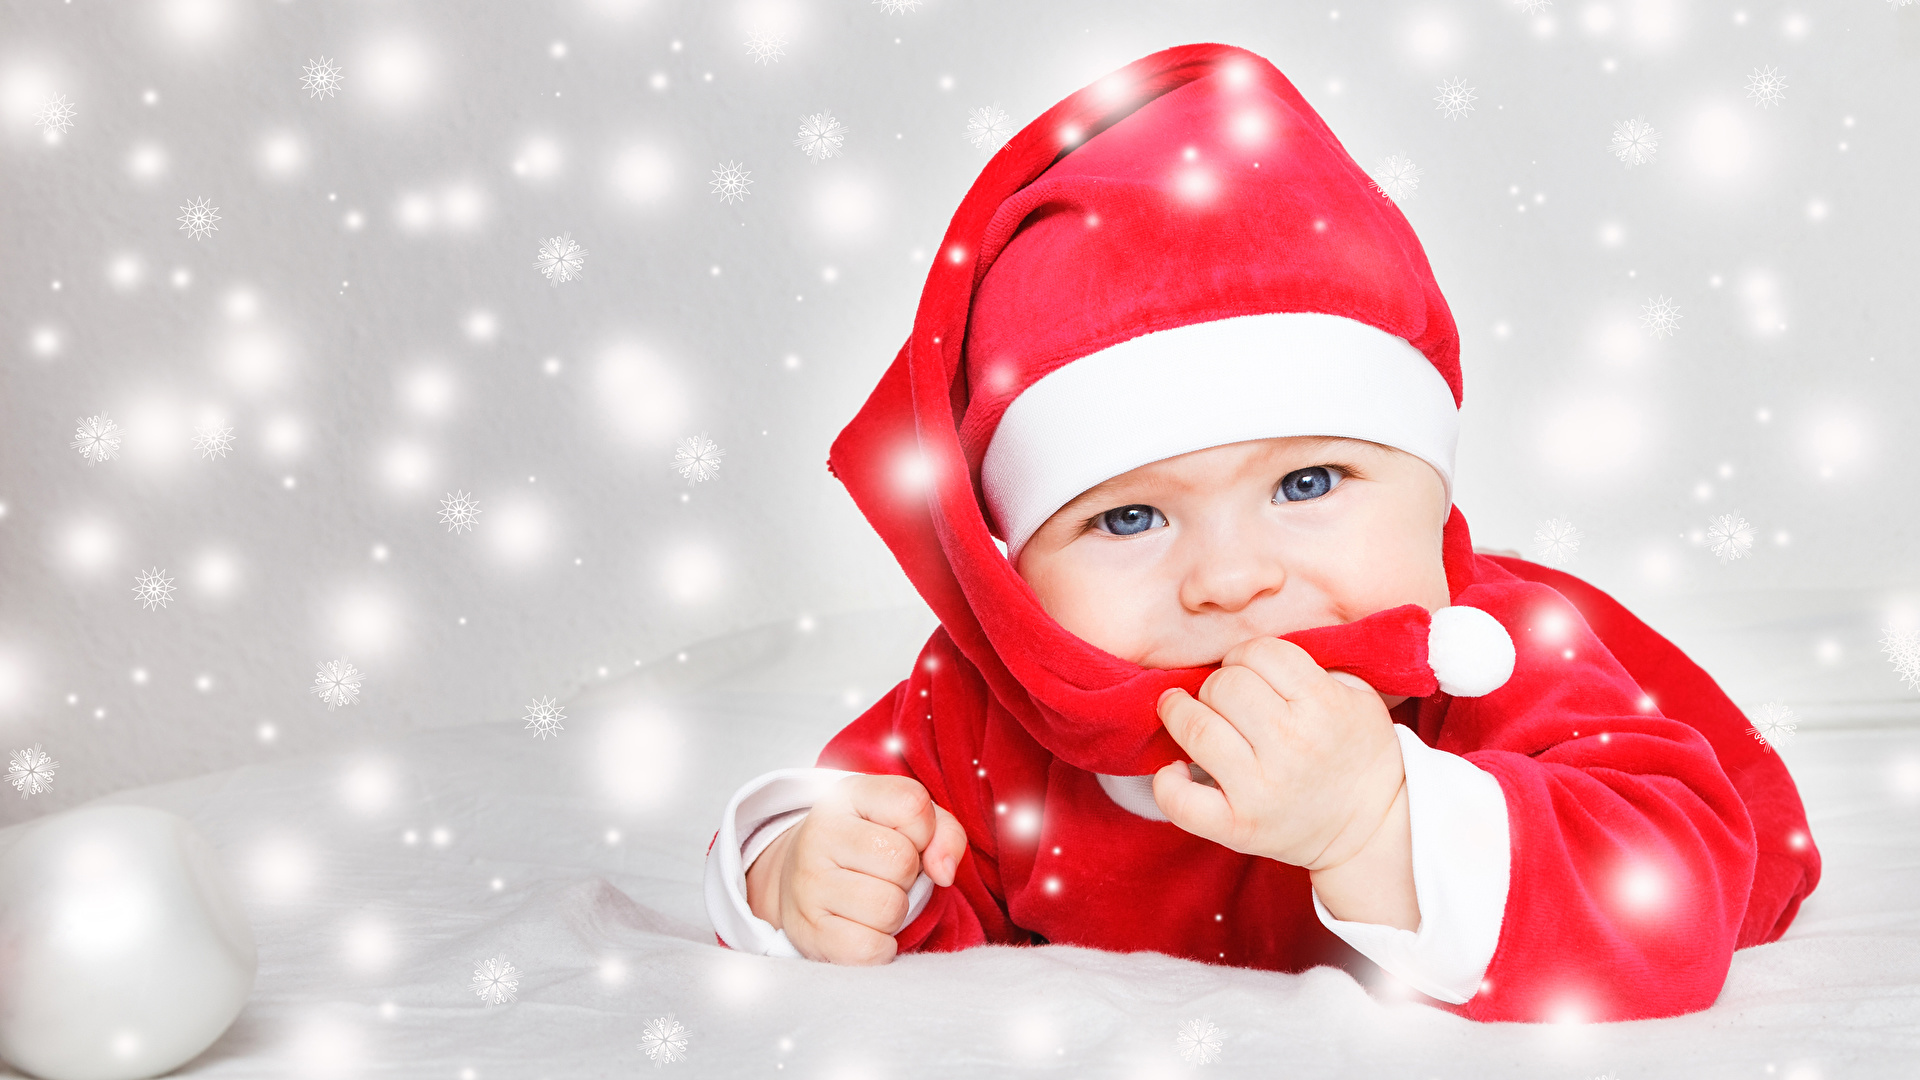 Image newborn Christmas child Winter hat Snowflakes Glance 1920x1080